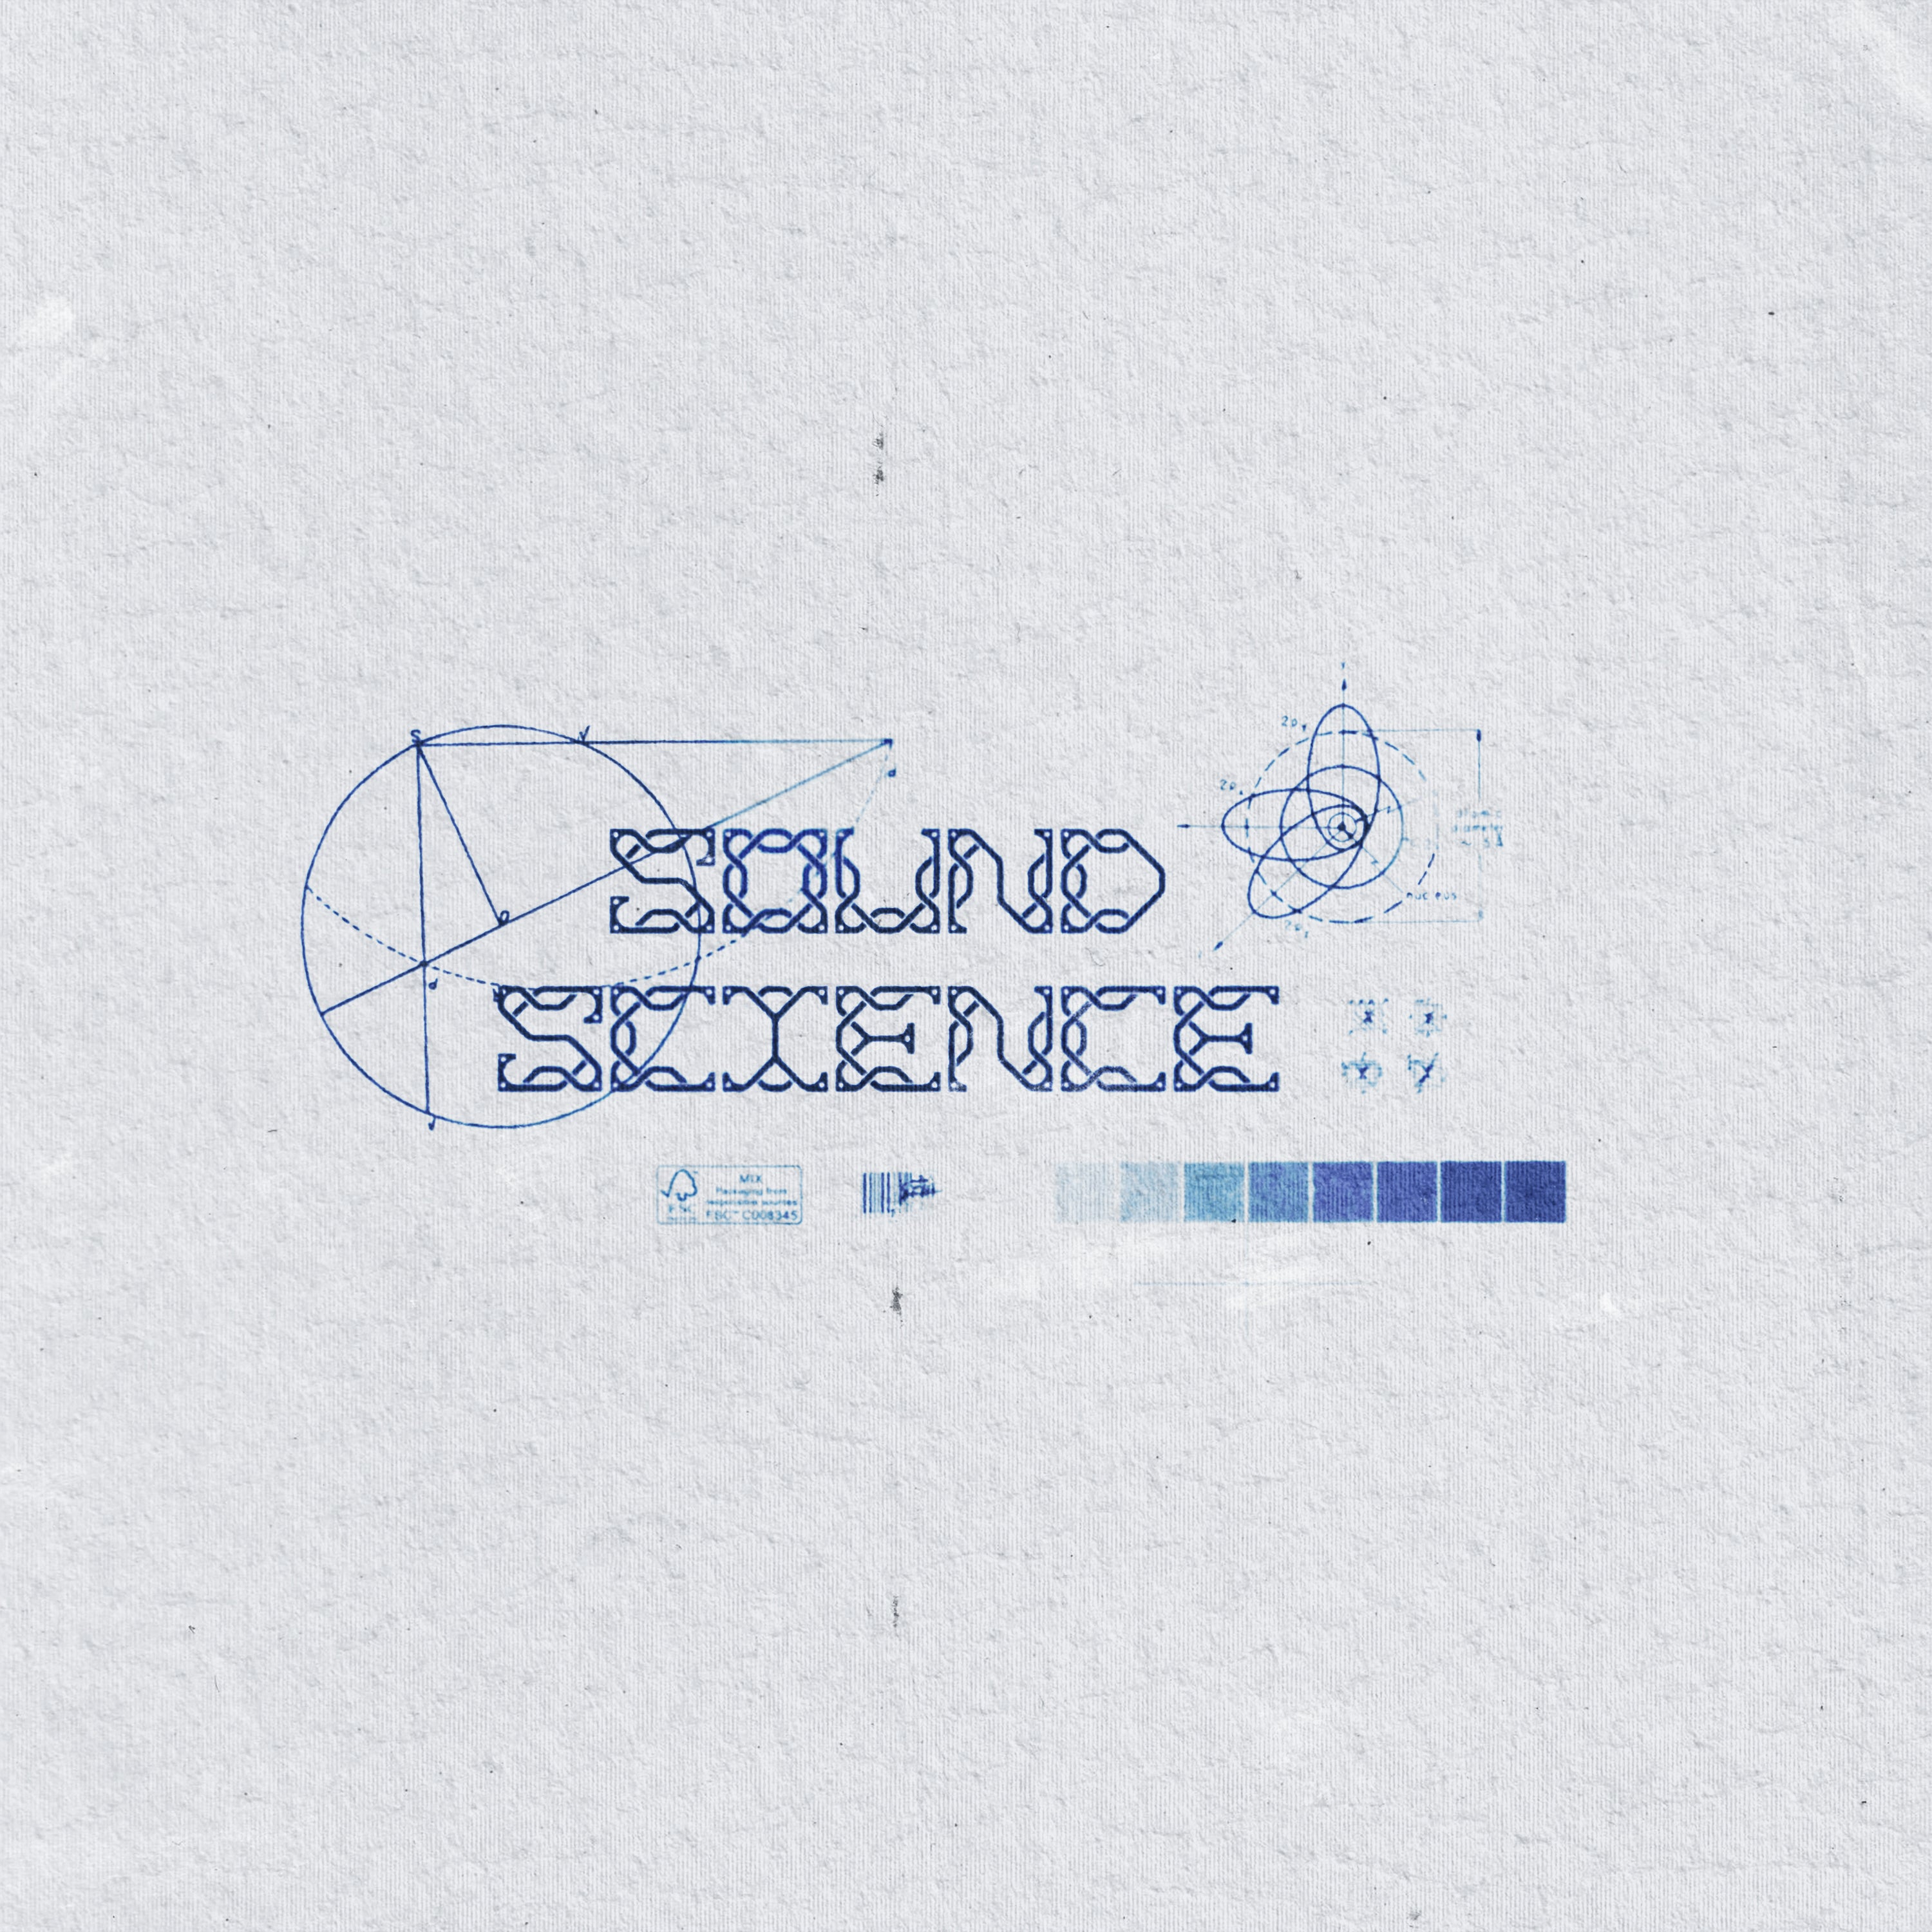 SOUND SCIENCE 01 Drumkit (Unique, Experimental)